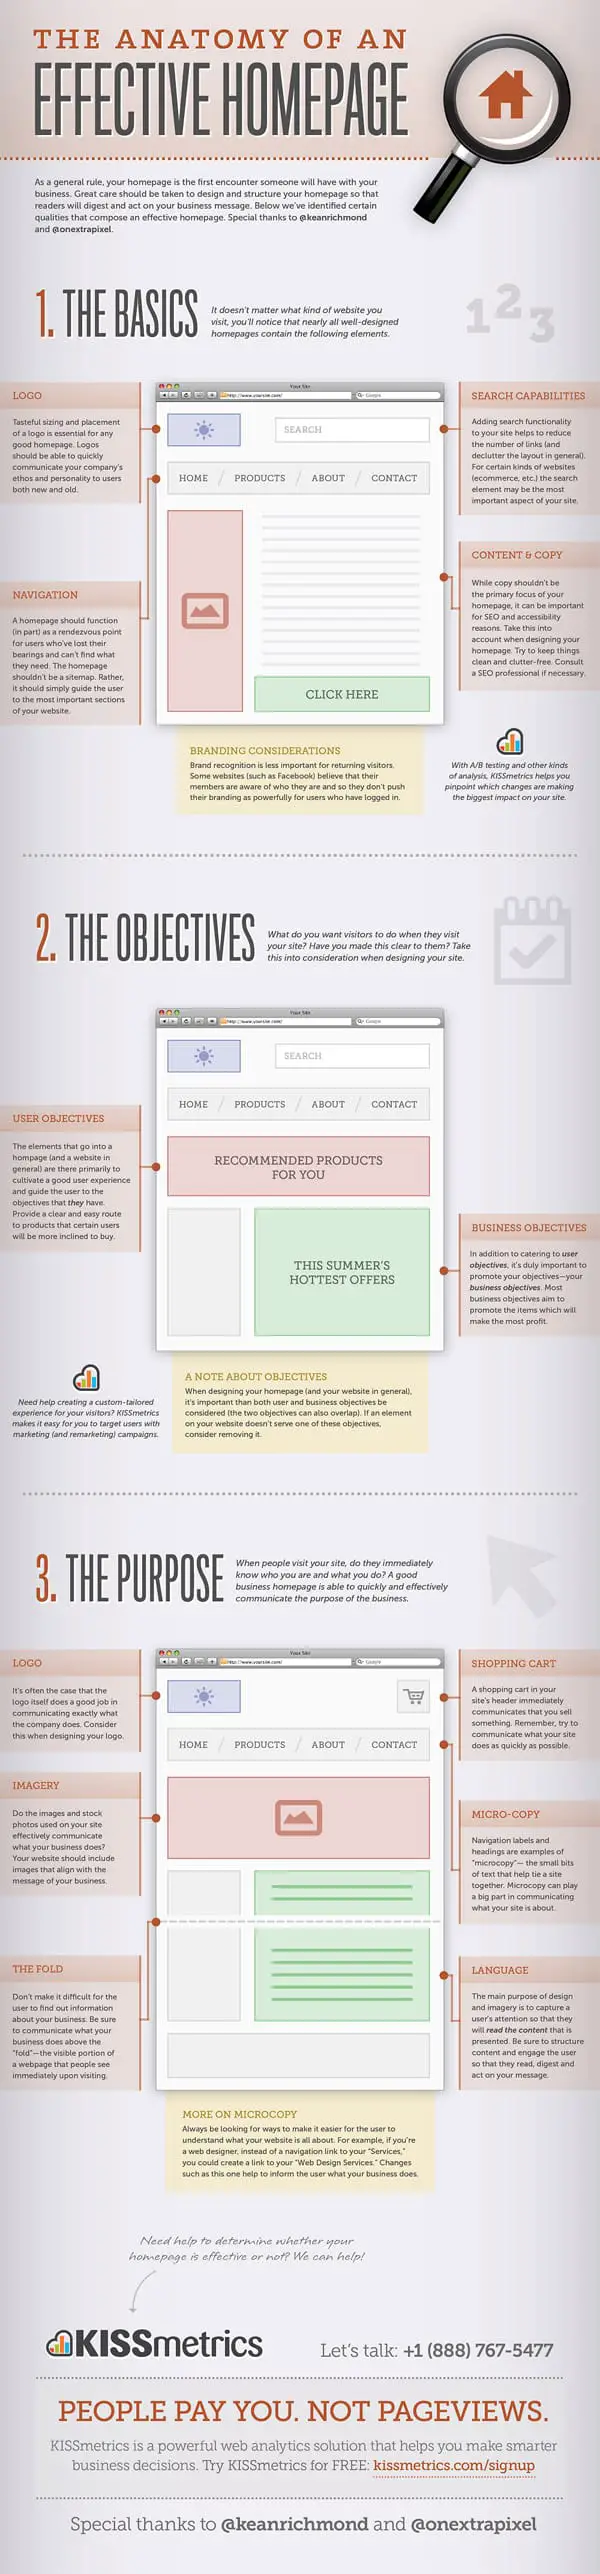 The Anatomy of an Effective Homepage by KISSmetrics